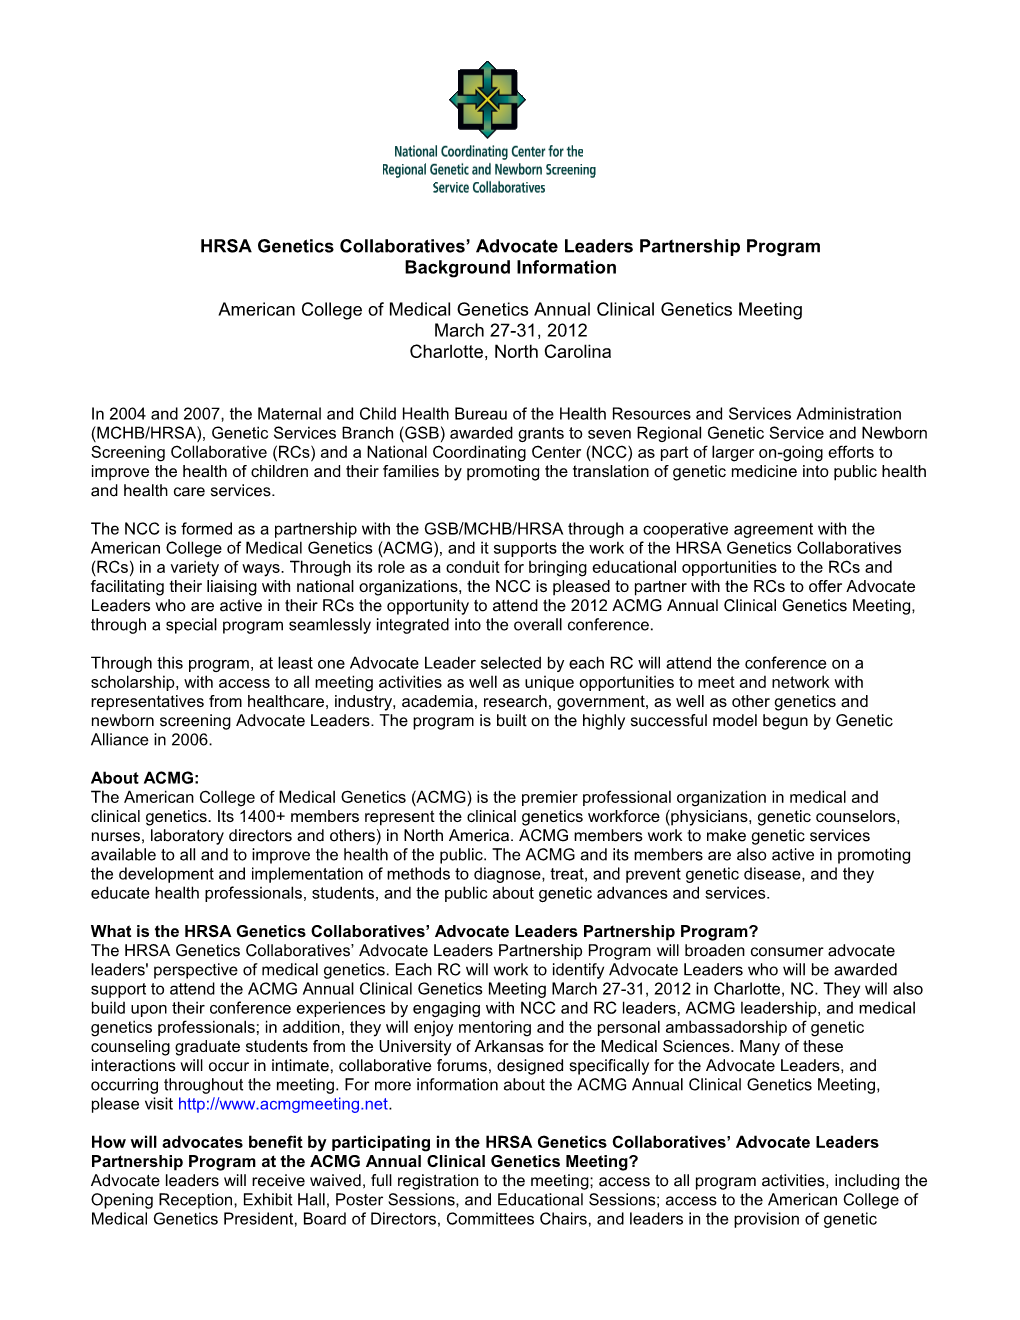 HRSA Genetics Collaboratives Advocate Leaders Partnership Program